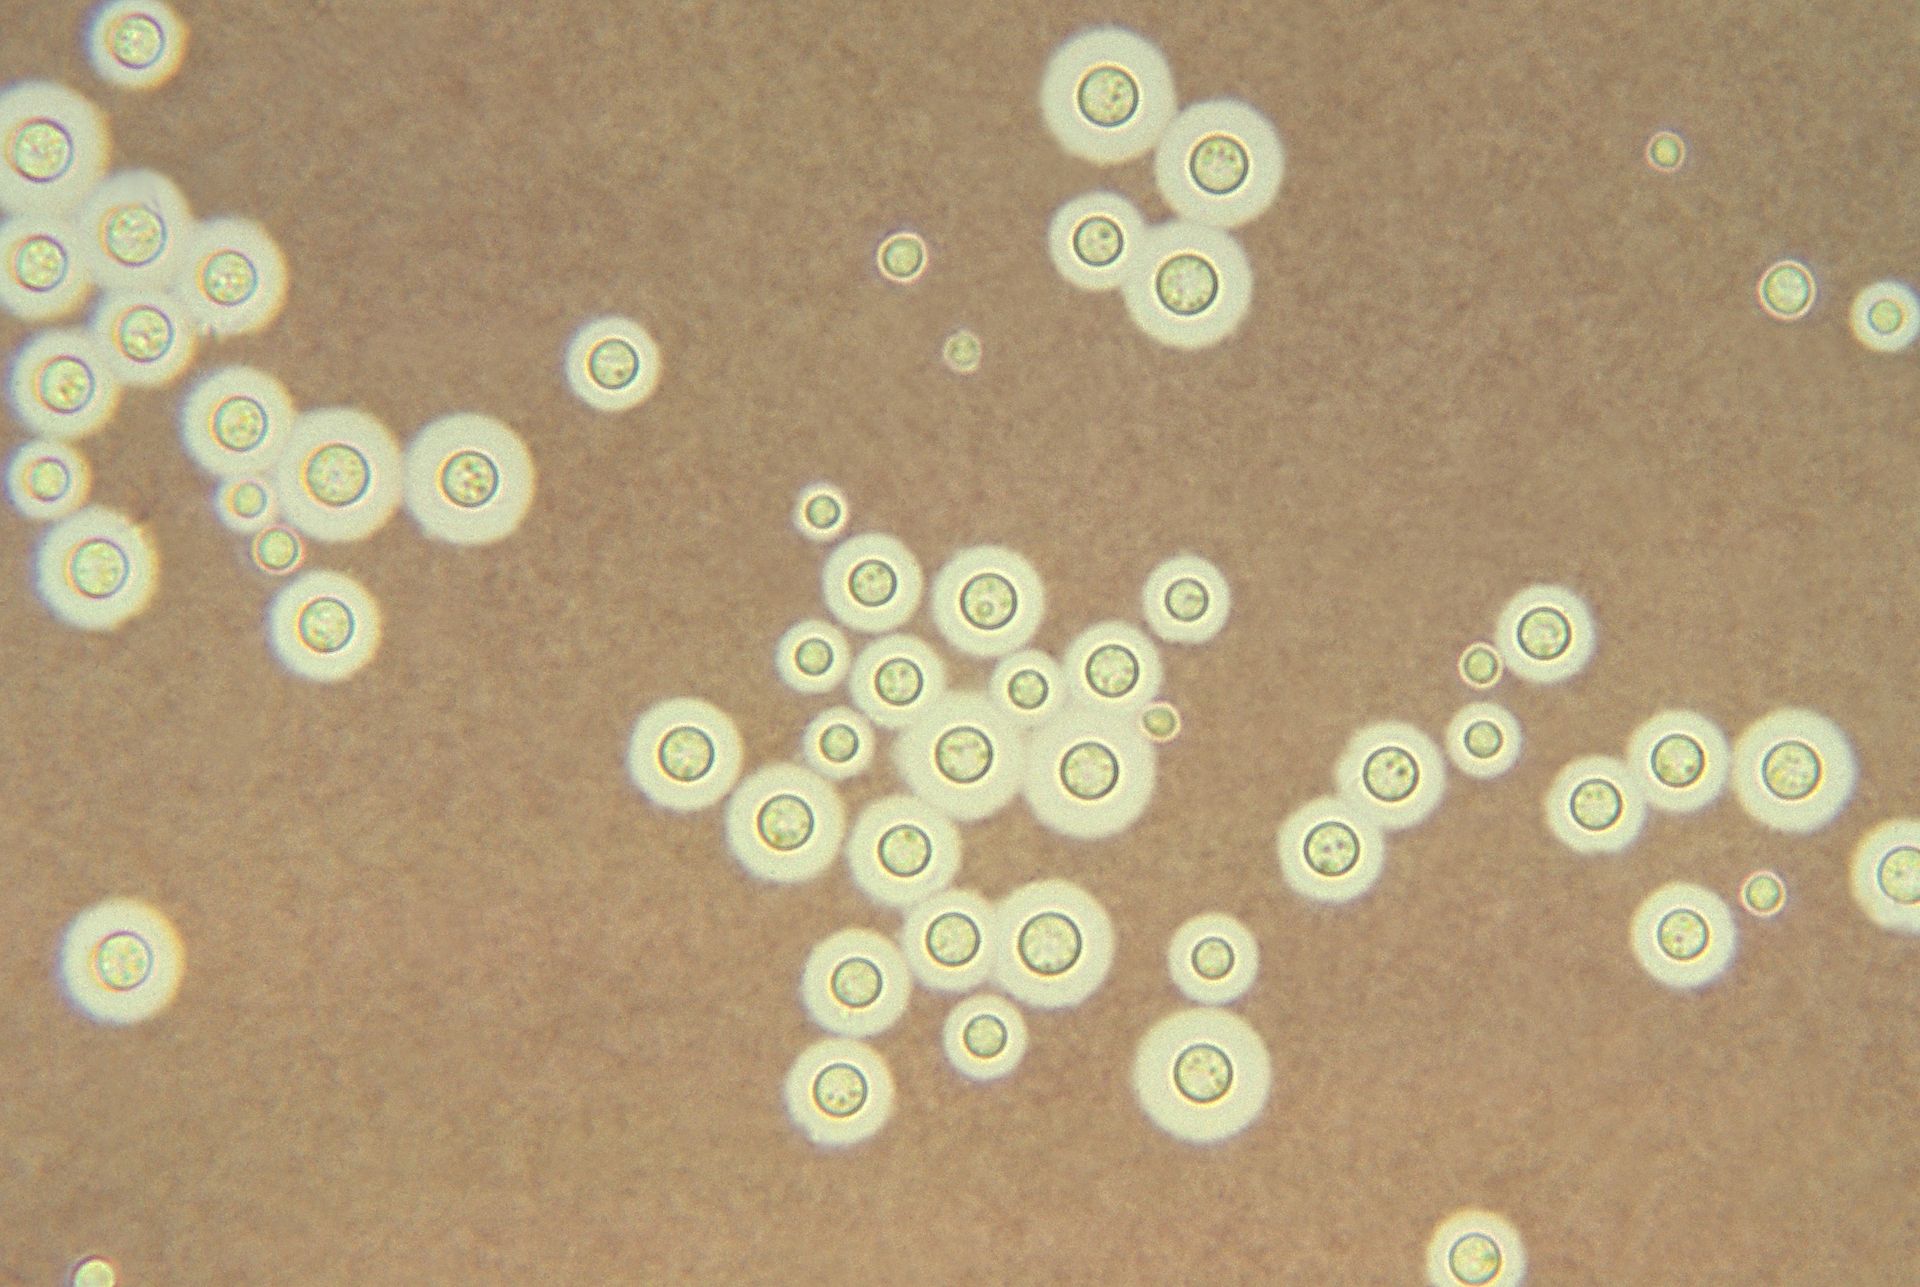 File:Cryptococcus neoformans2.jpg